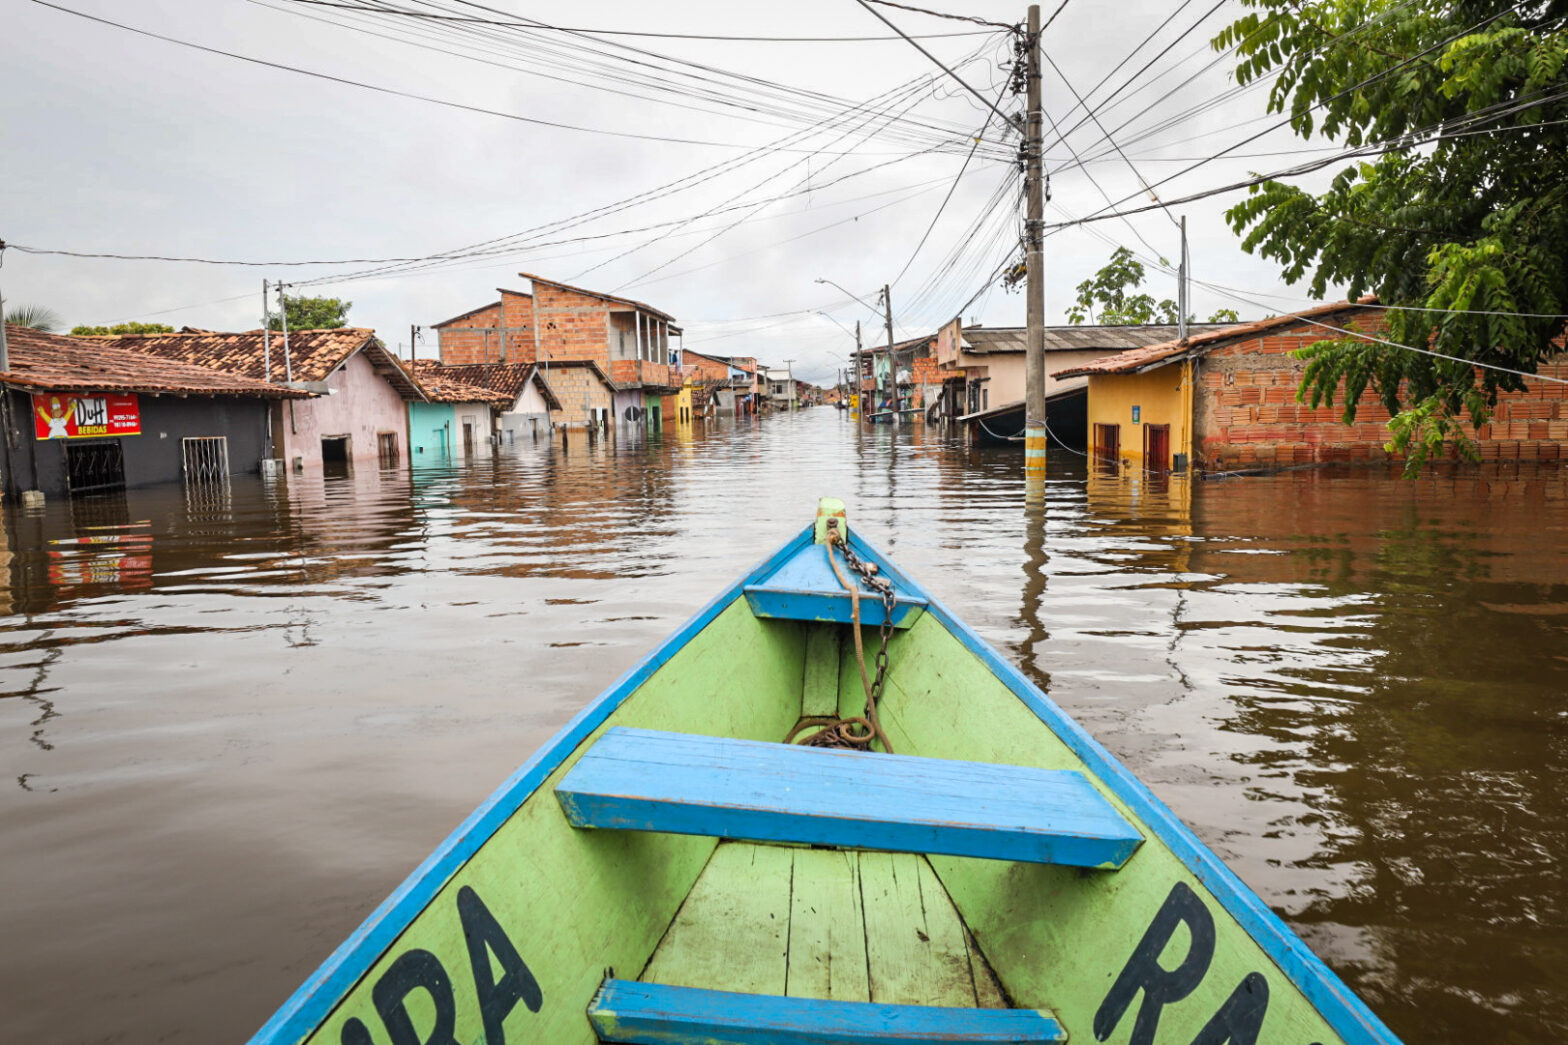 El Niño pode potencializar fogo na Amazônia, alertam cientistas - Amazônia  Real